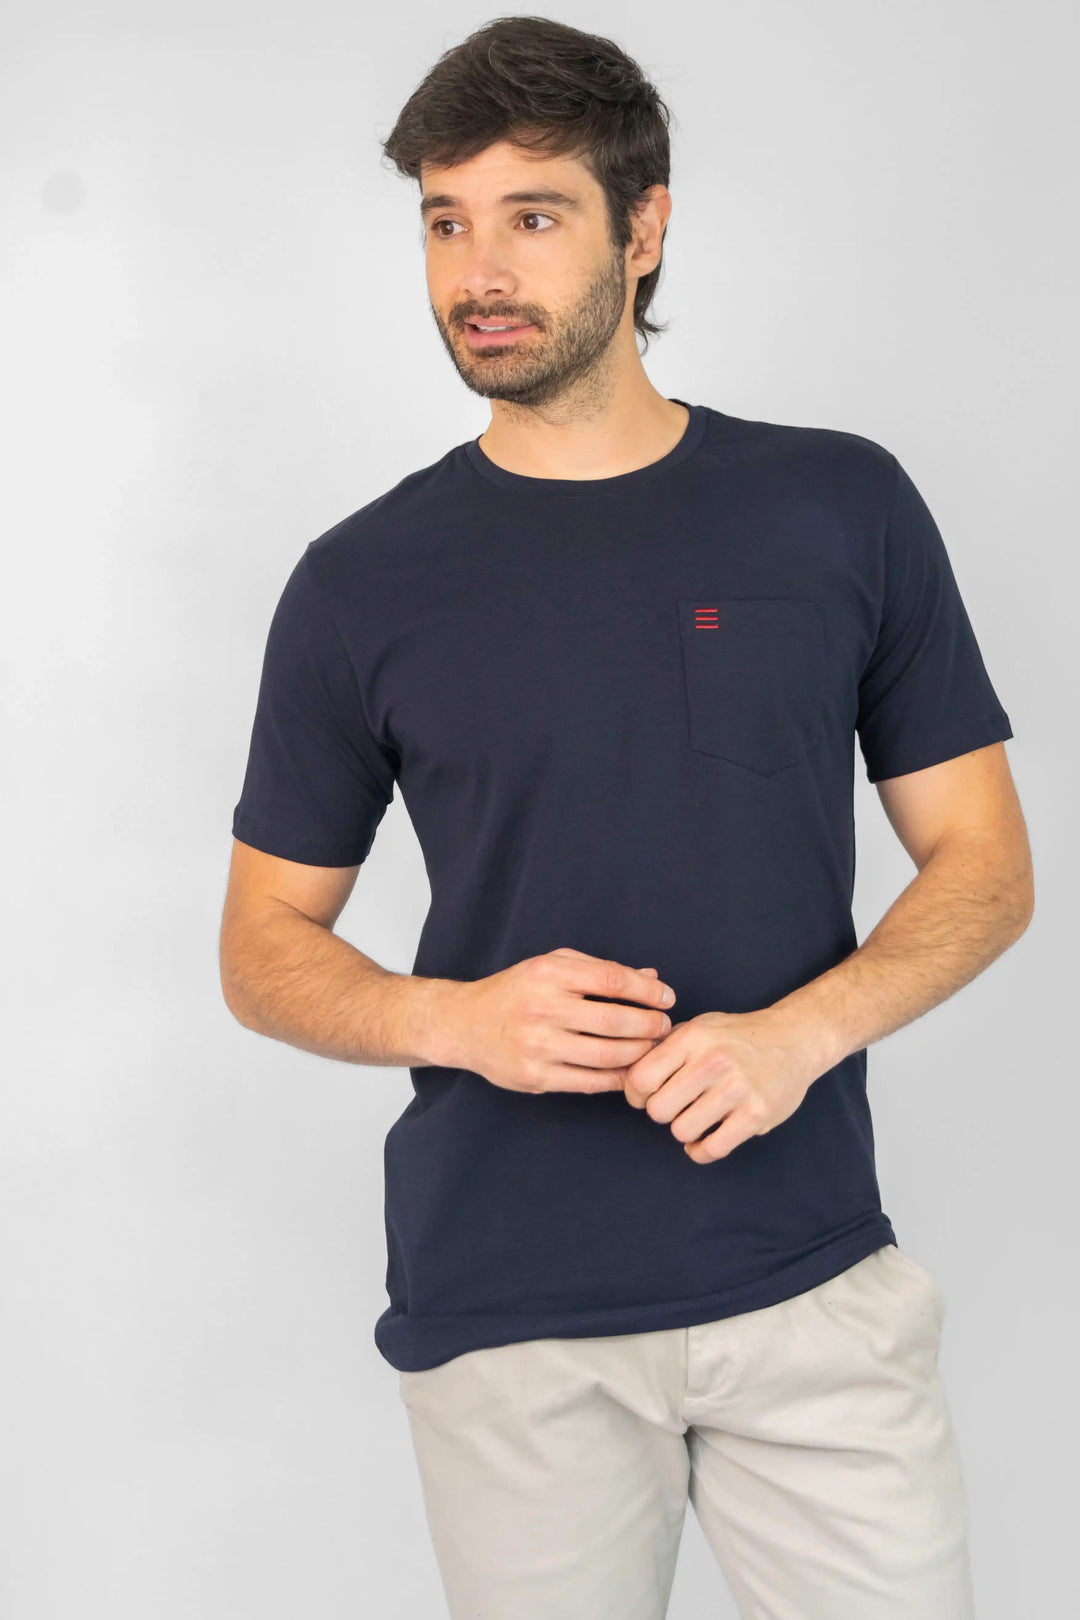 camiseta para hombre manga corta, color azul oscuro, bolsillo en el pecho